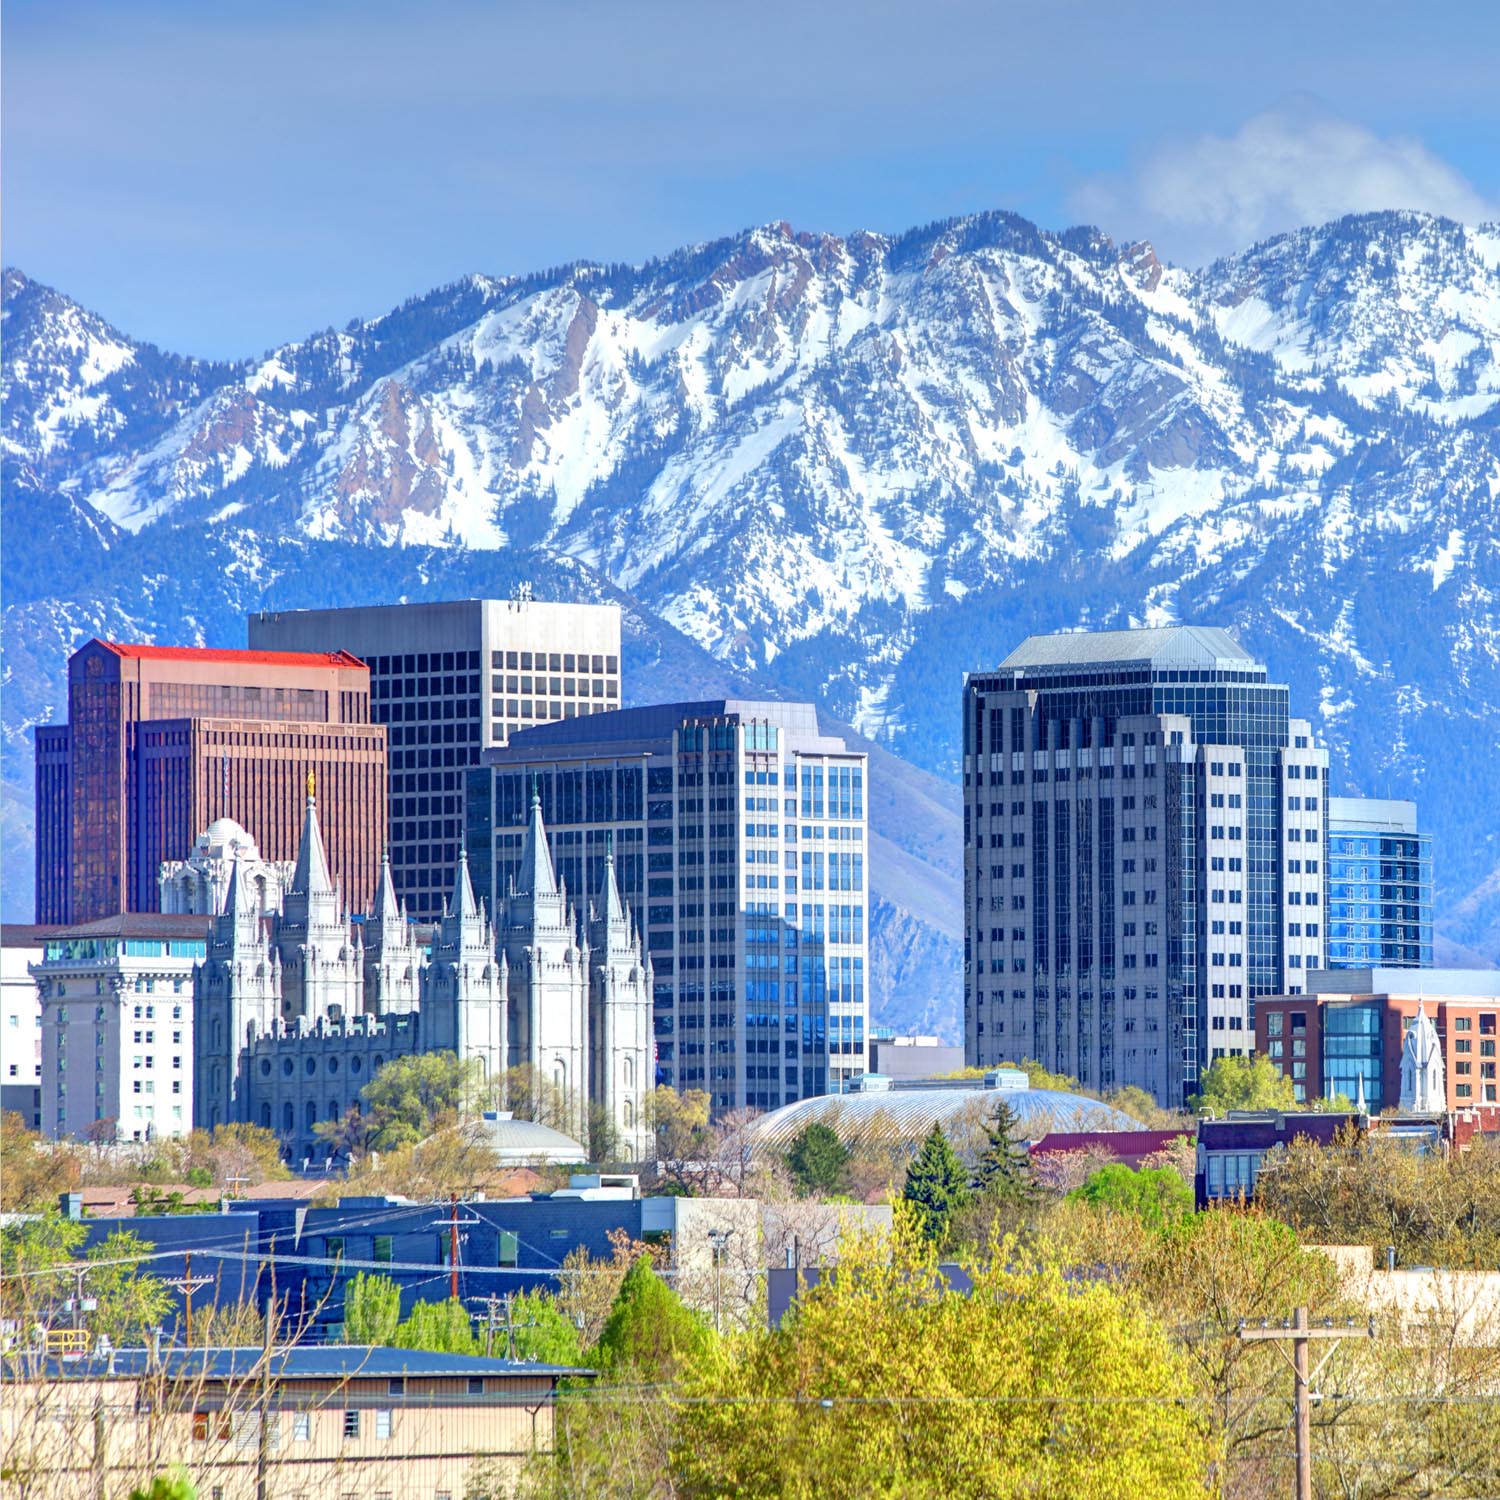 Salt Lake City skyline